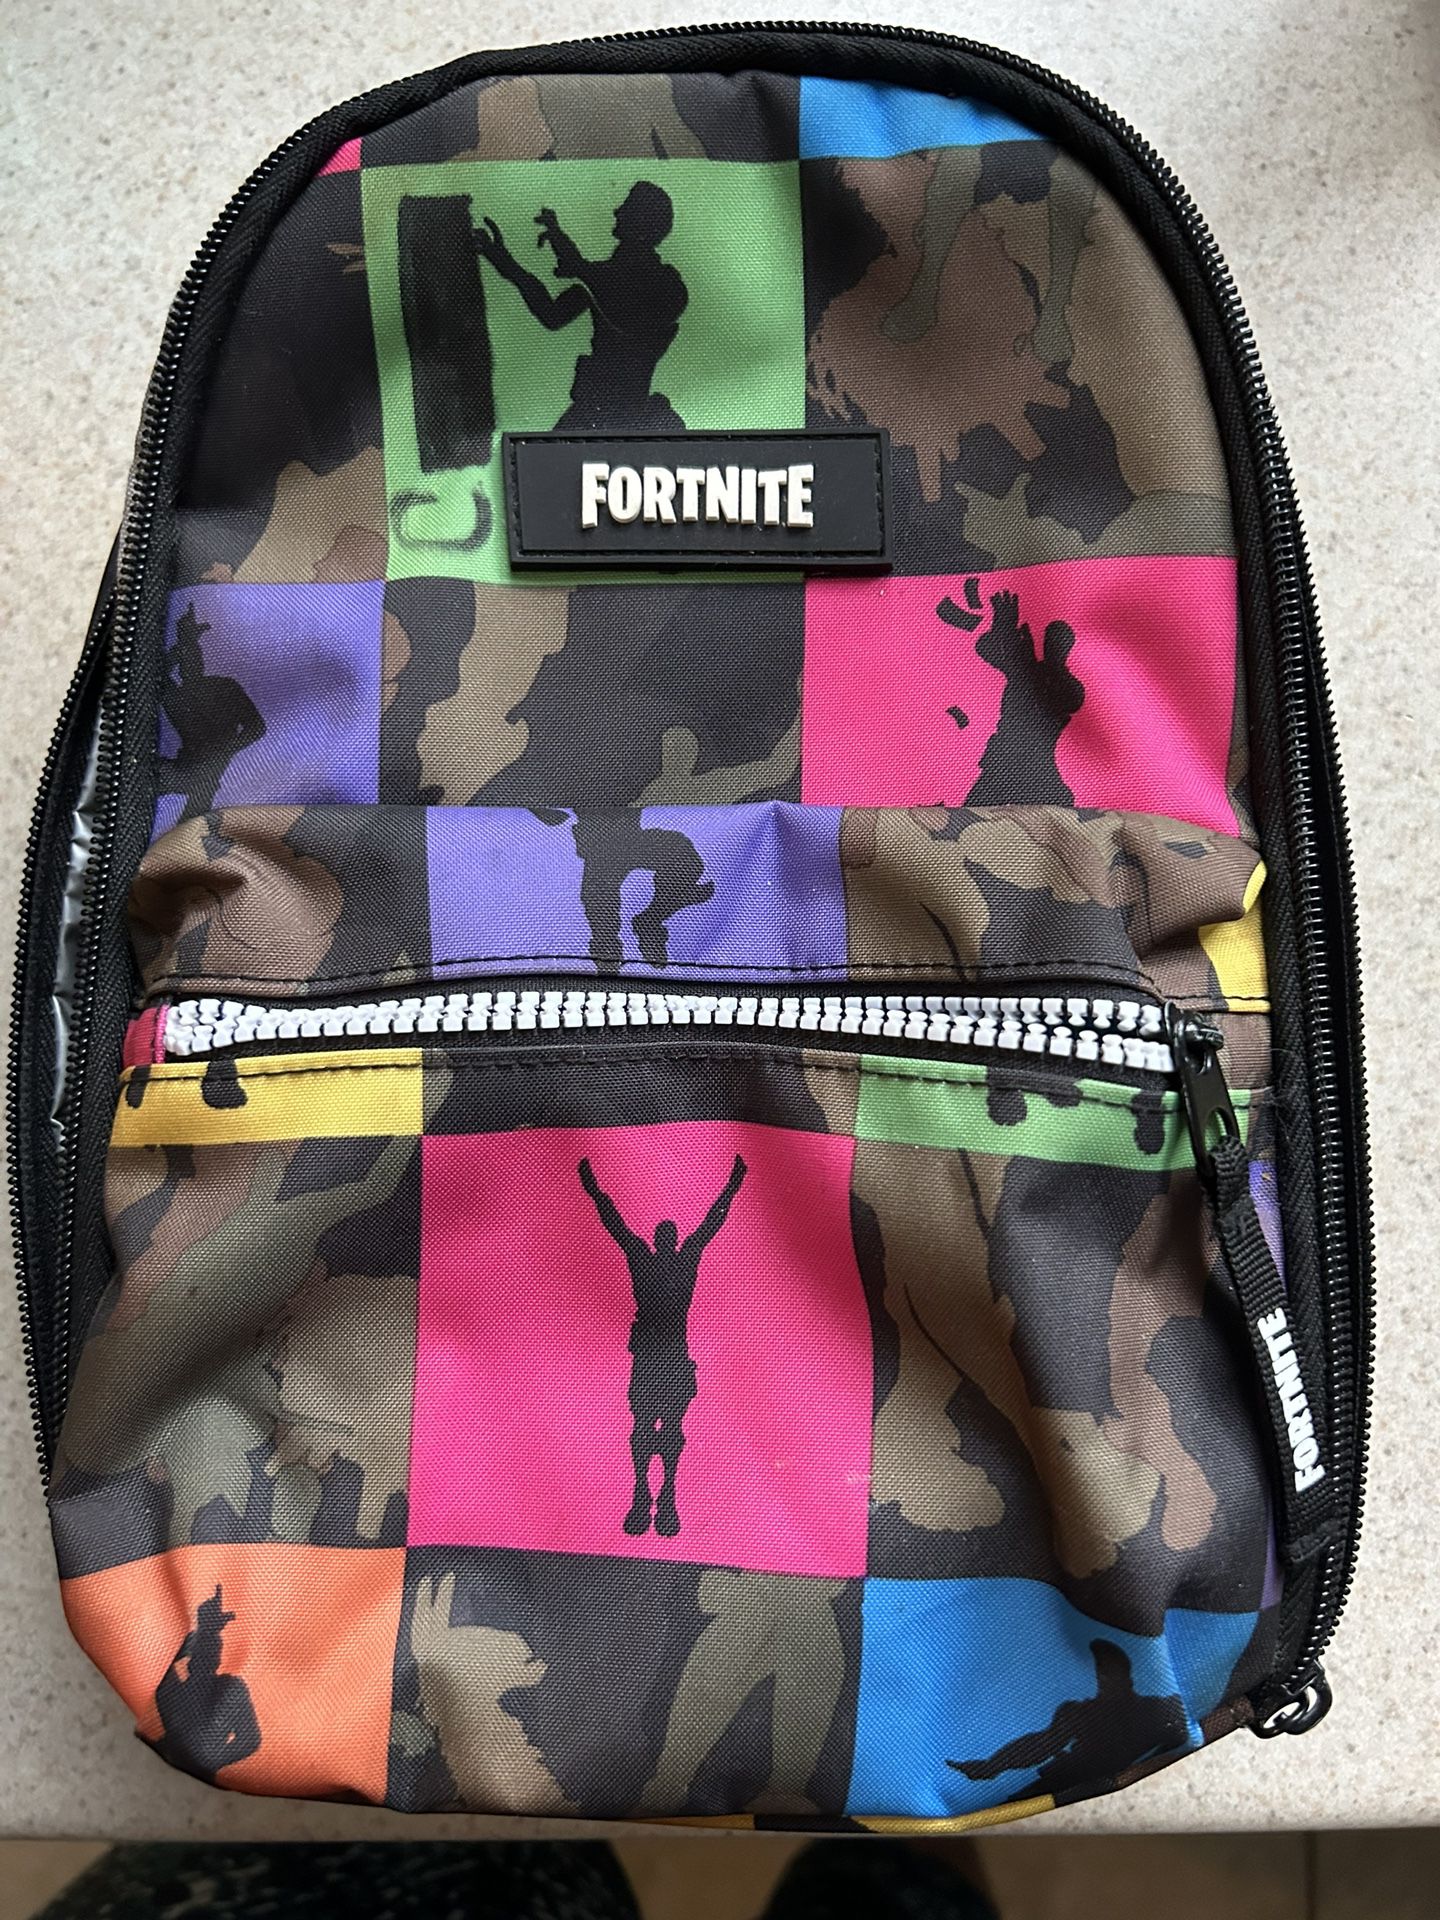 Fortnite Lunch bag